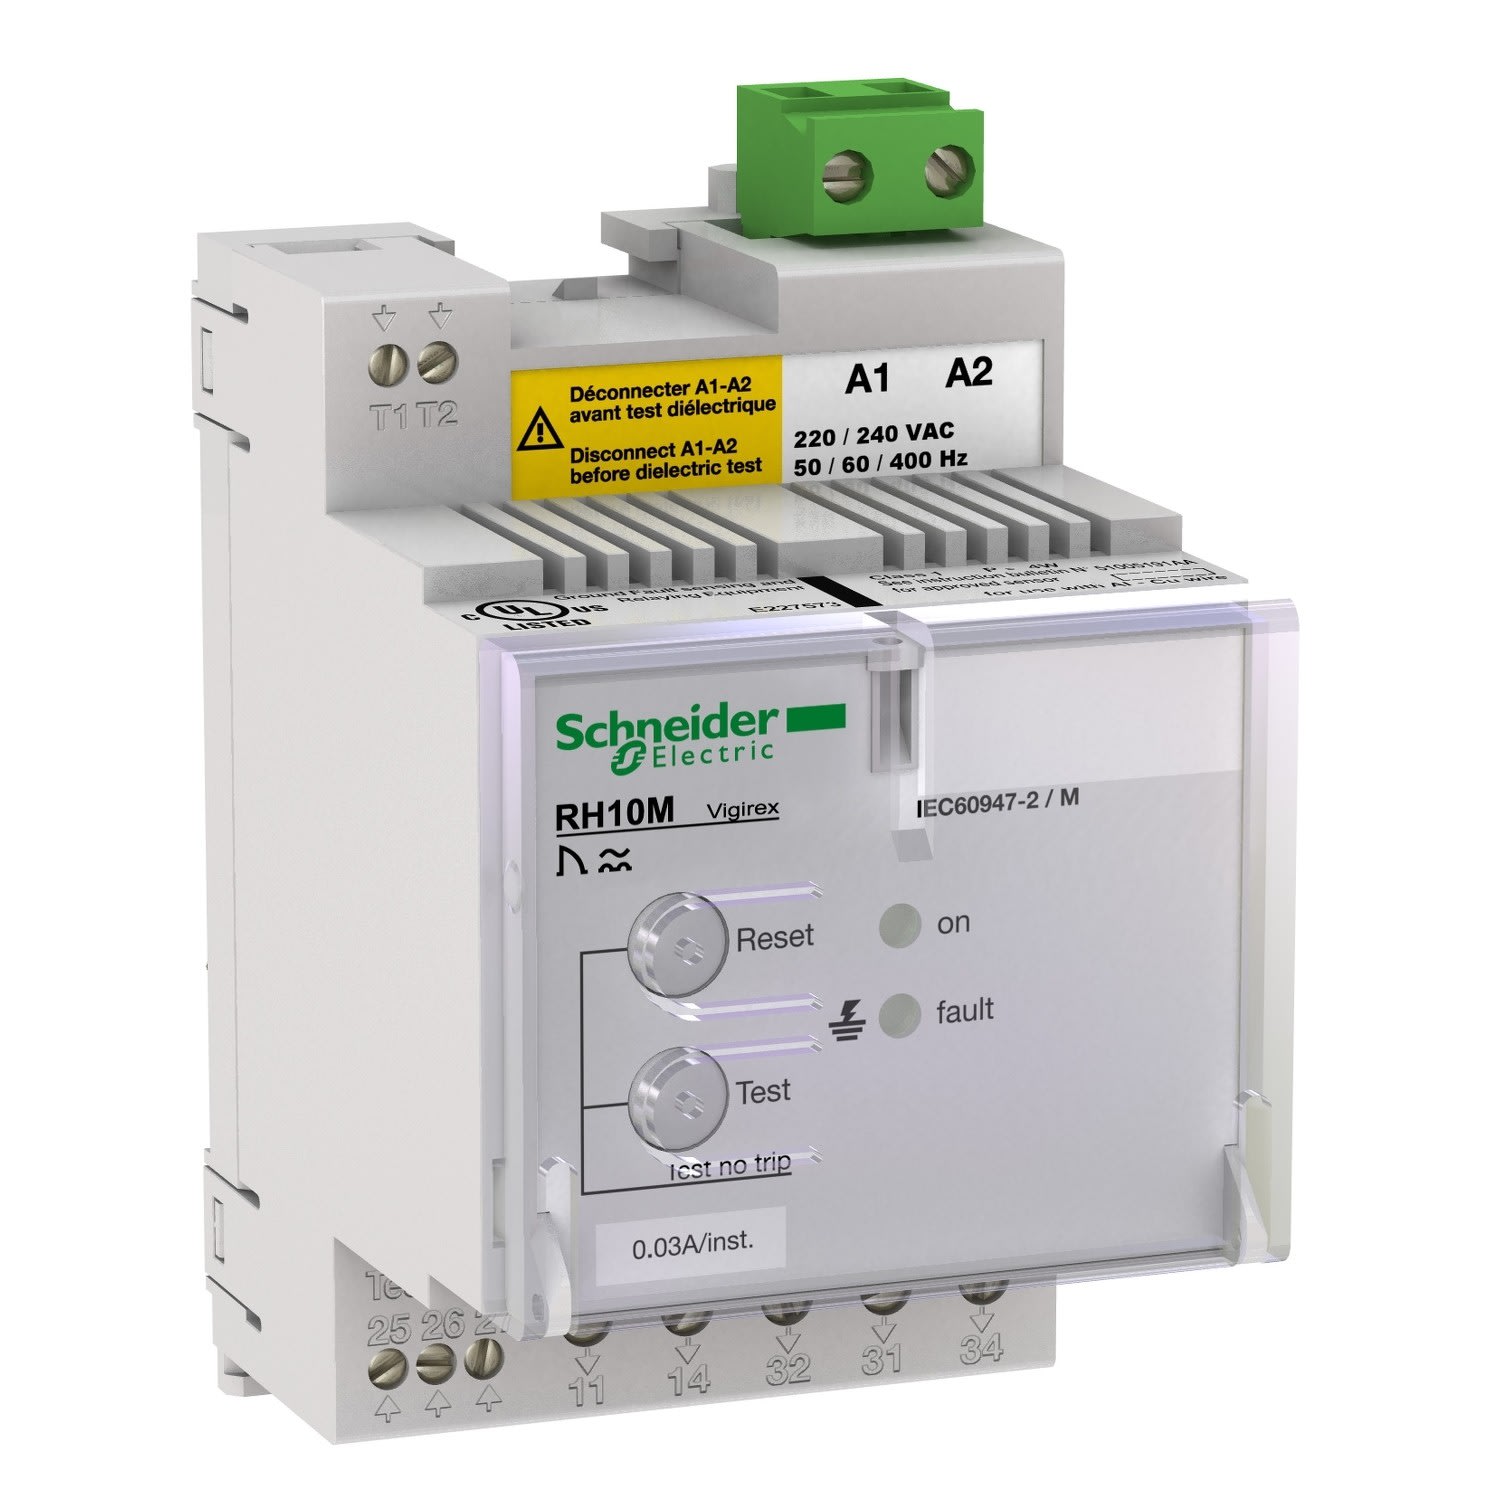 Schneider Electric - Vigirex RH10M 12-24VAC-12-48VCC sensibilite 0,03A - instantane